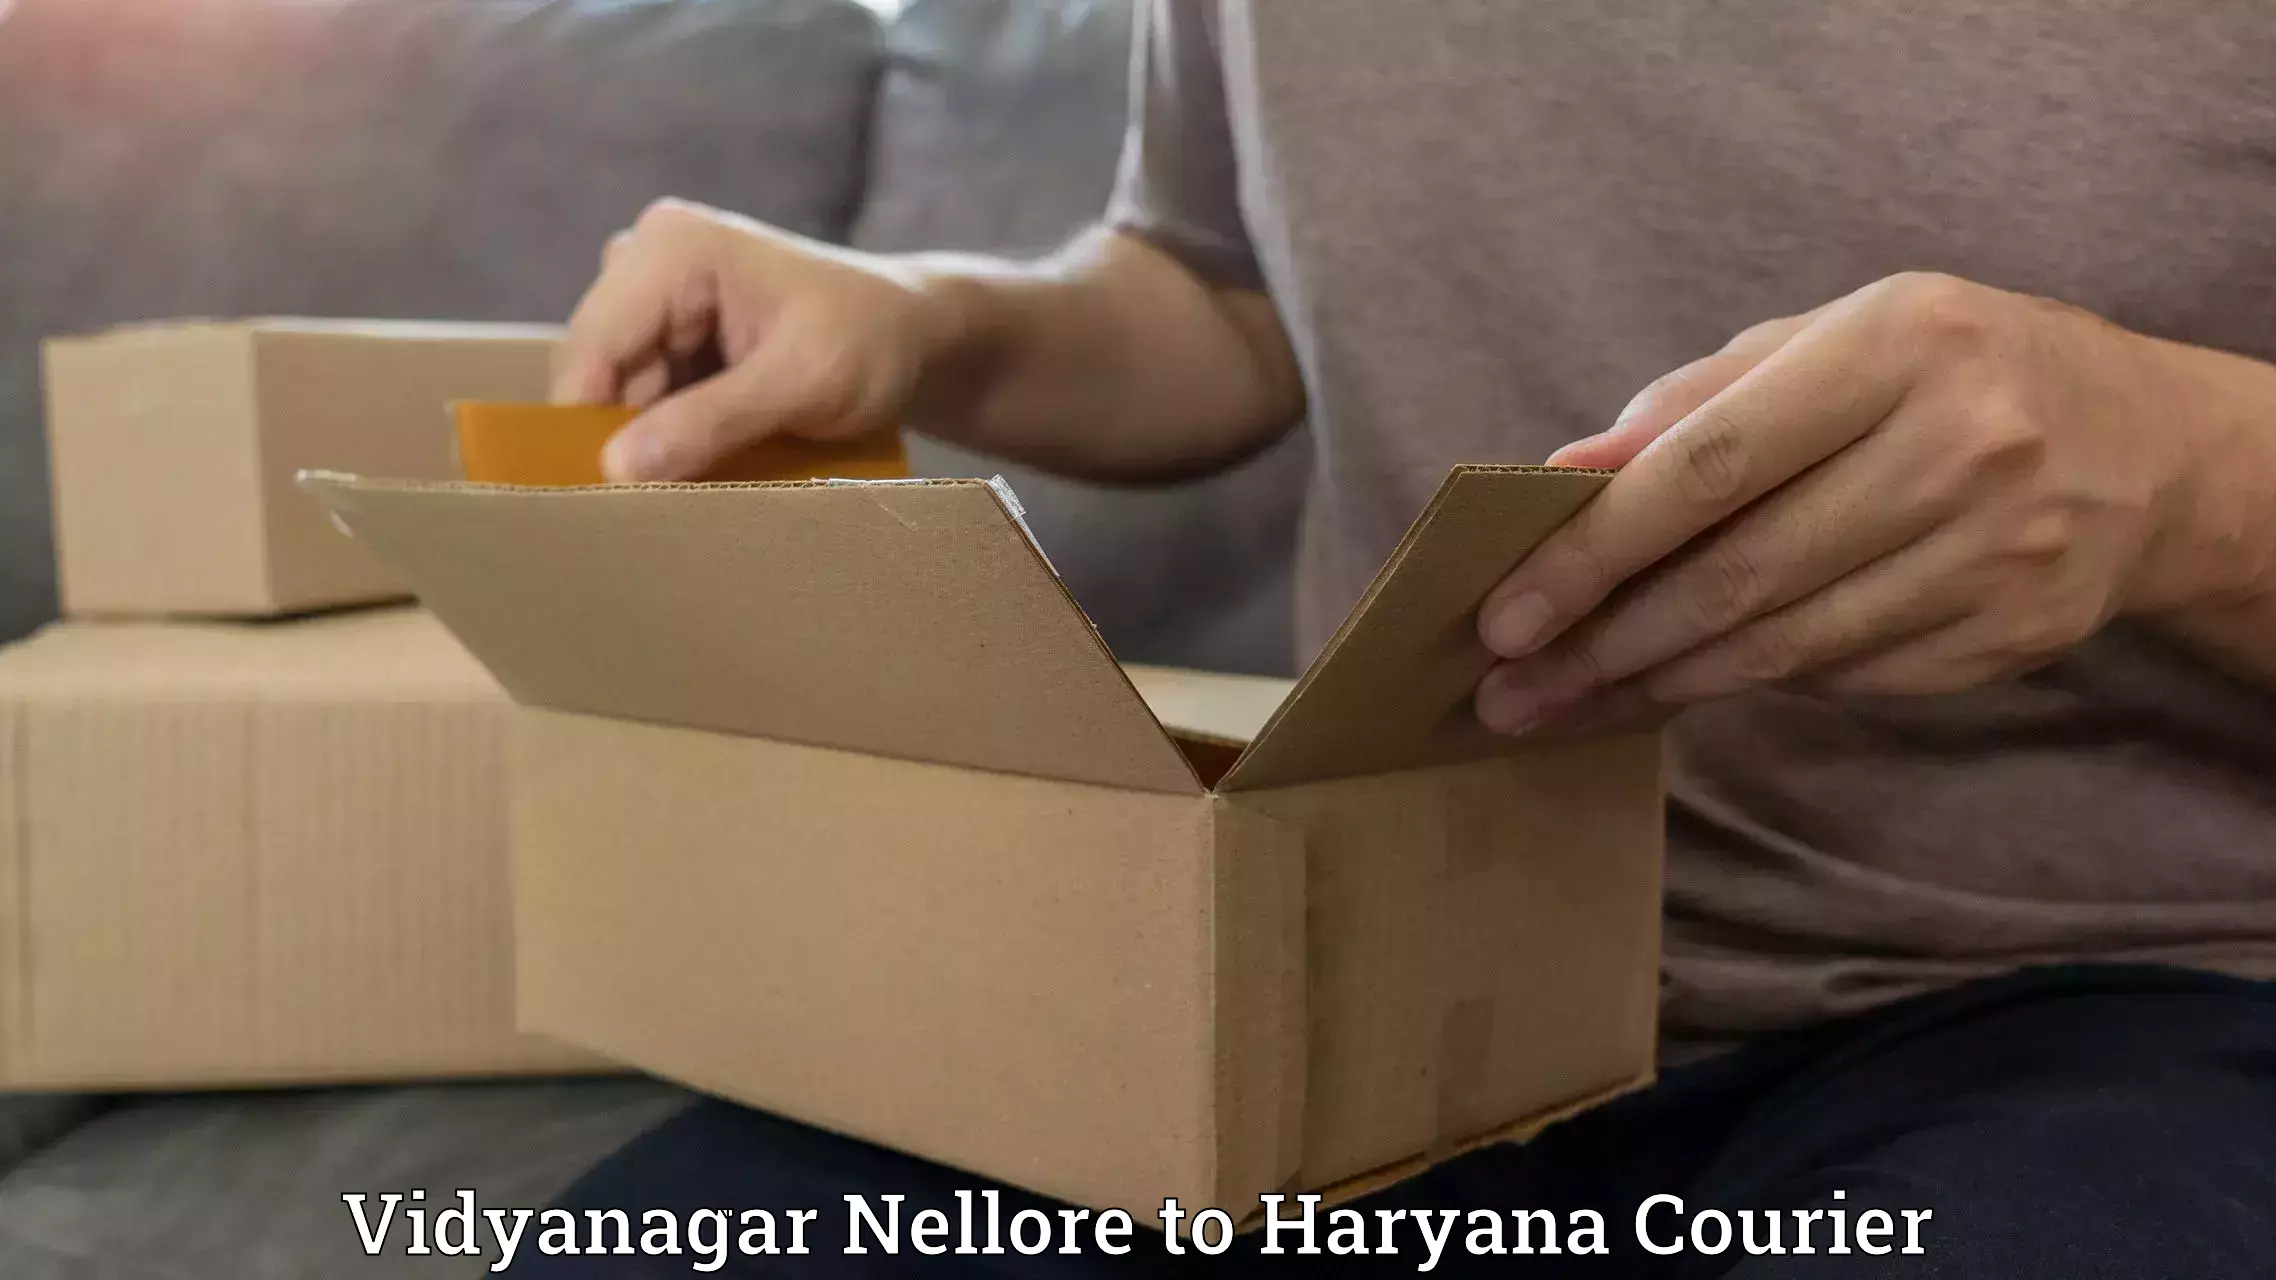 Reliable courier service Vidyanagar Nellore to Gurgaon